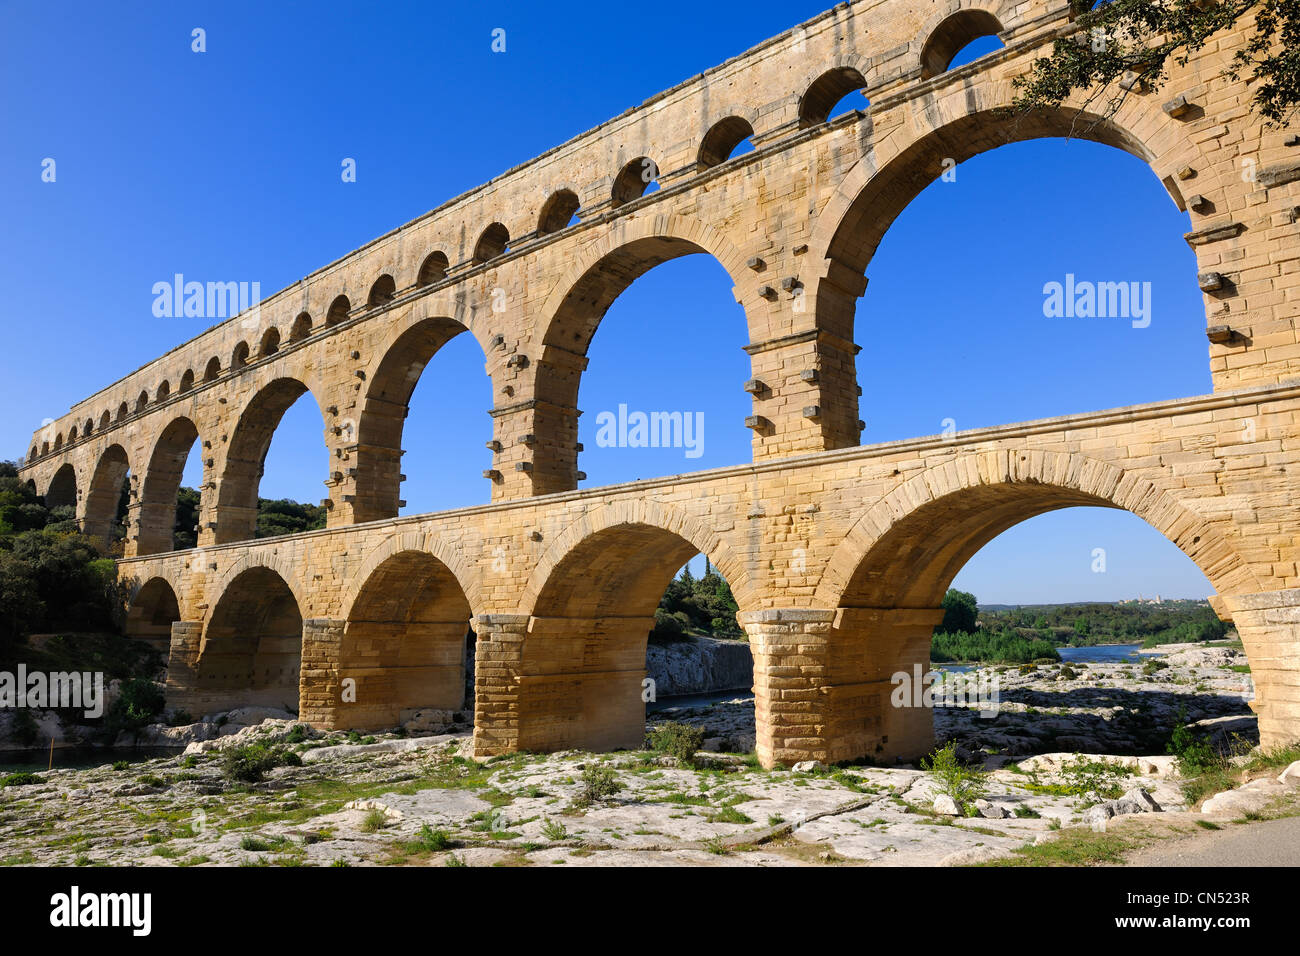 France, Gard, Pont du Gard listed as World Heritage by UNESCO, Roman aqueduct over Gardon River Stock Photo